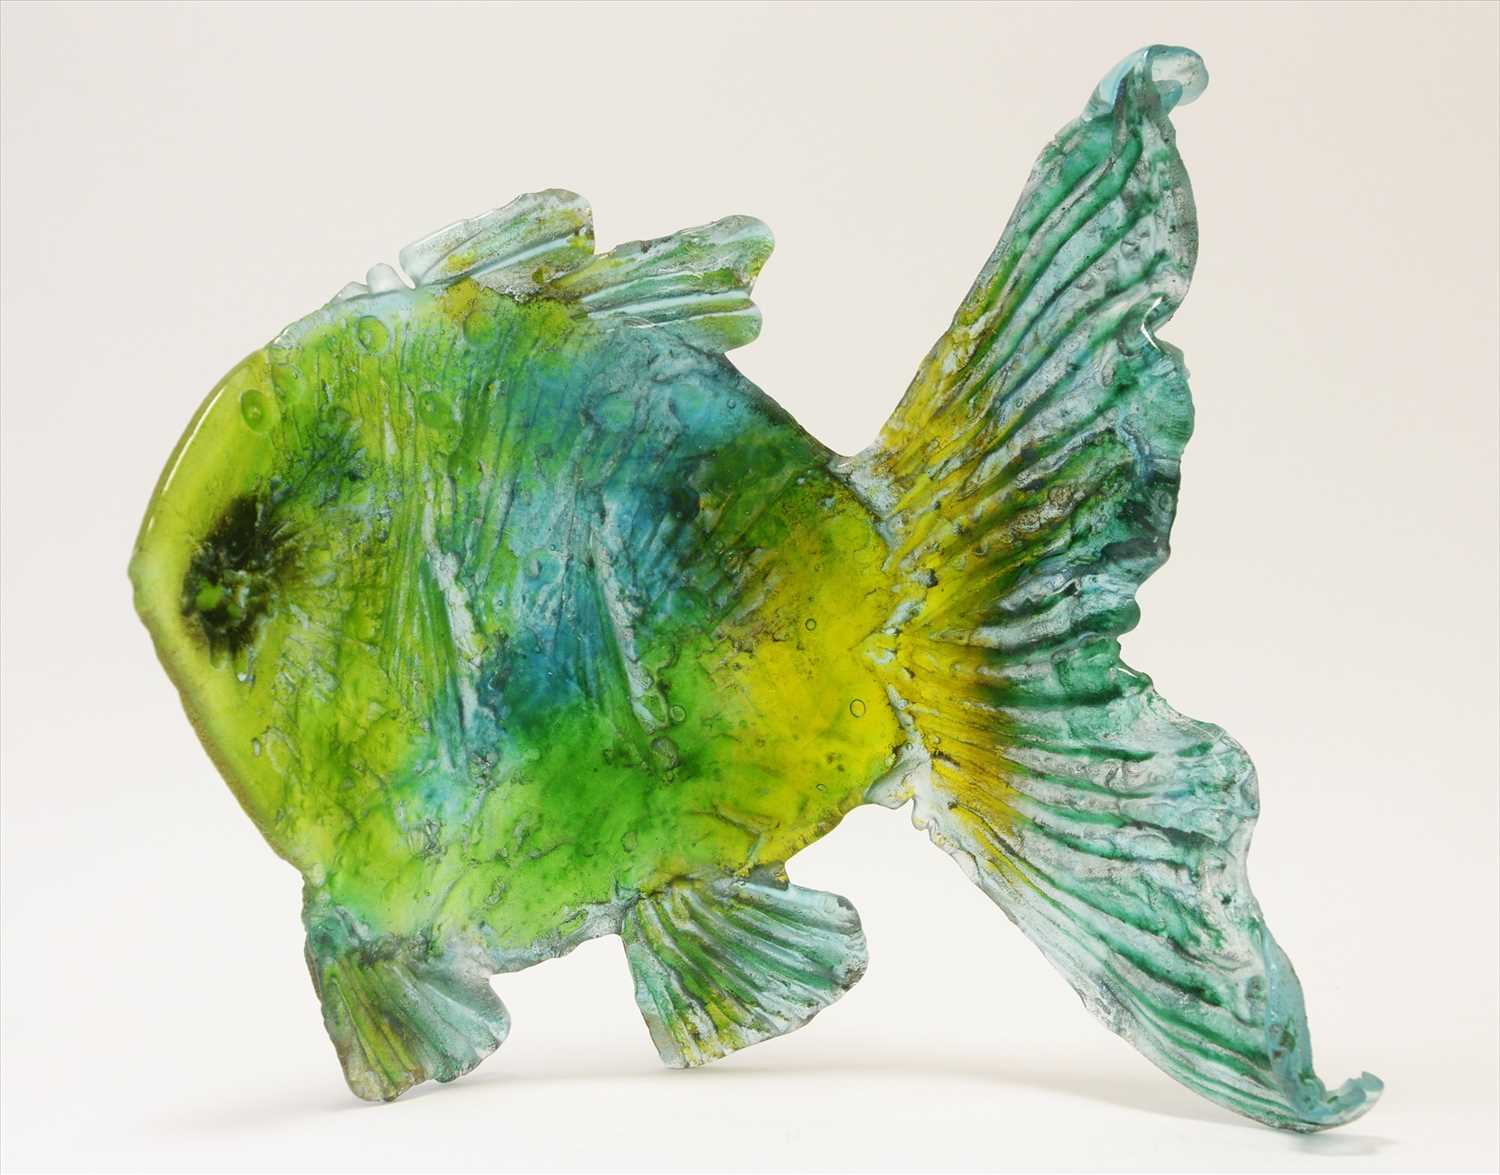 Lot 918 - large modern glass fish sculpture